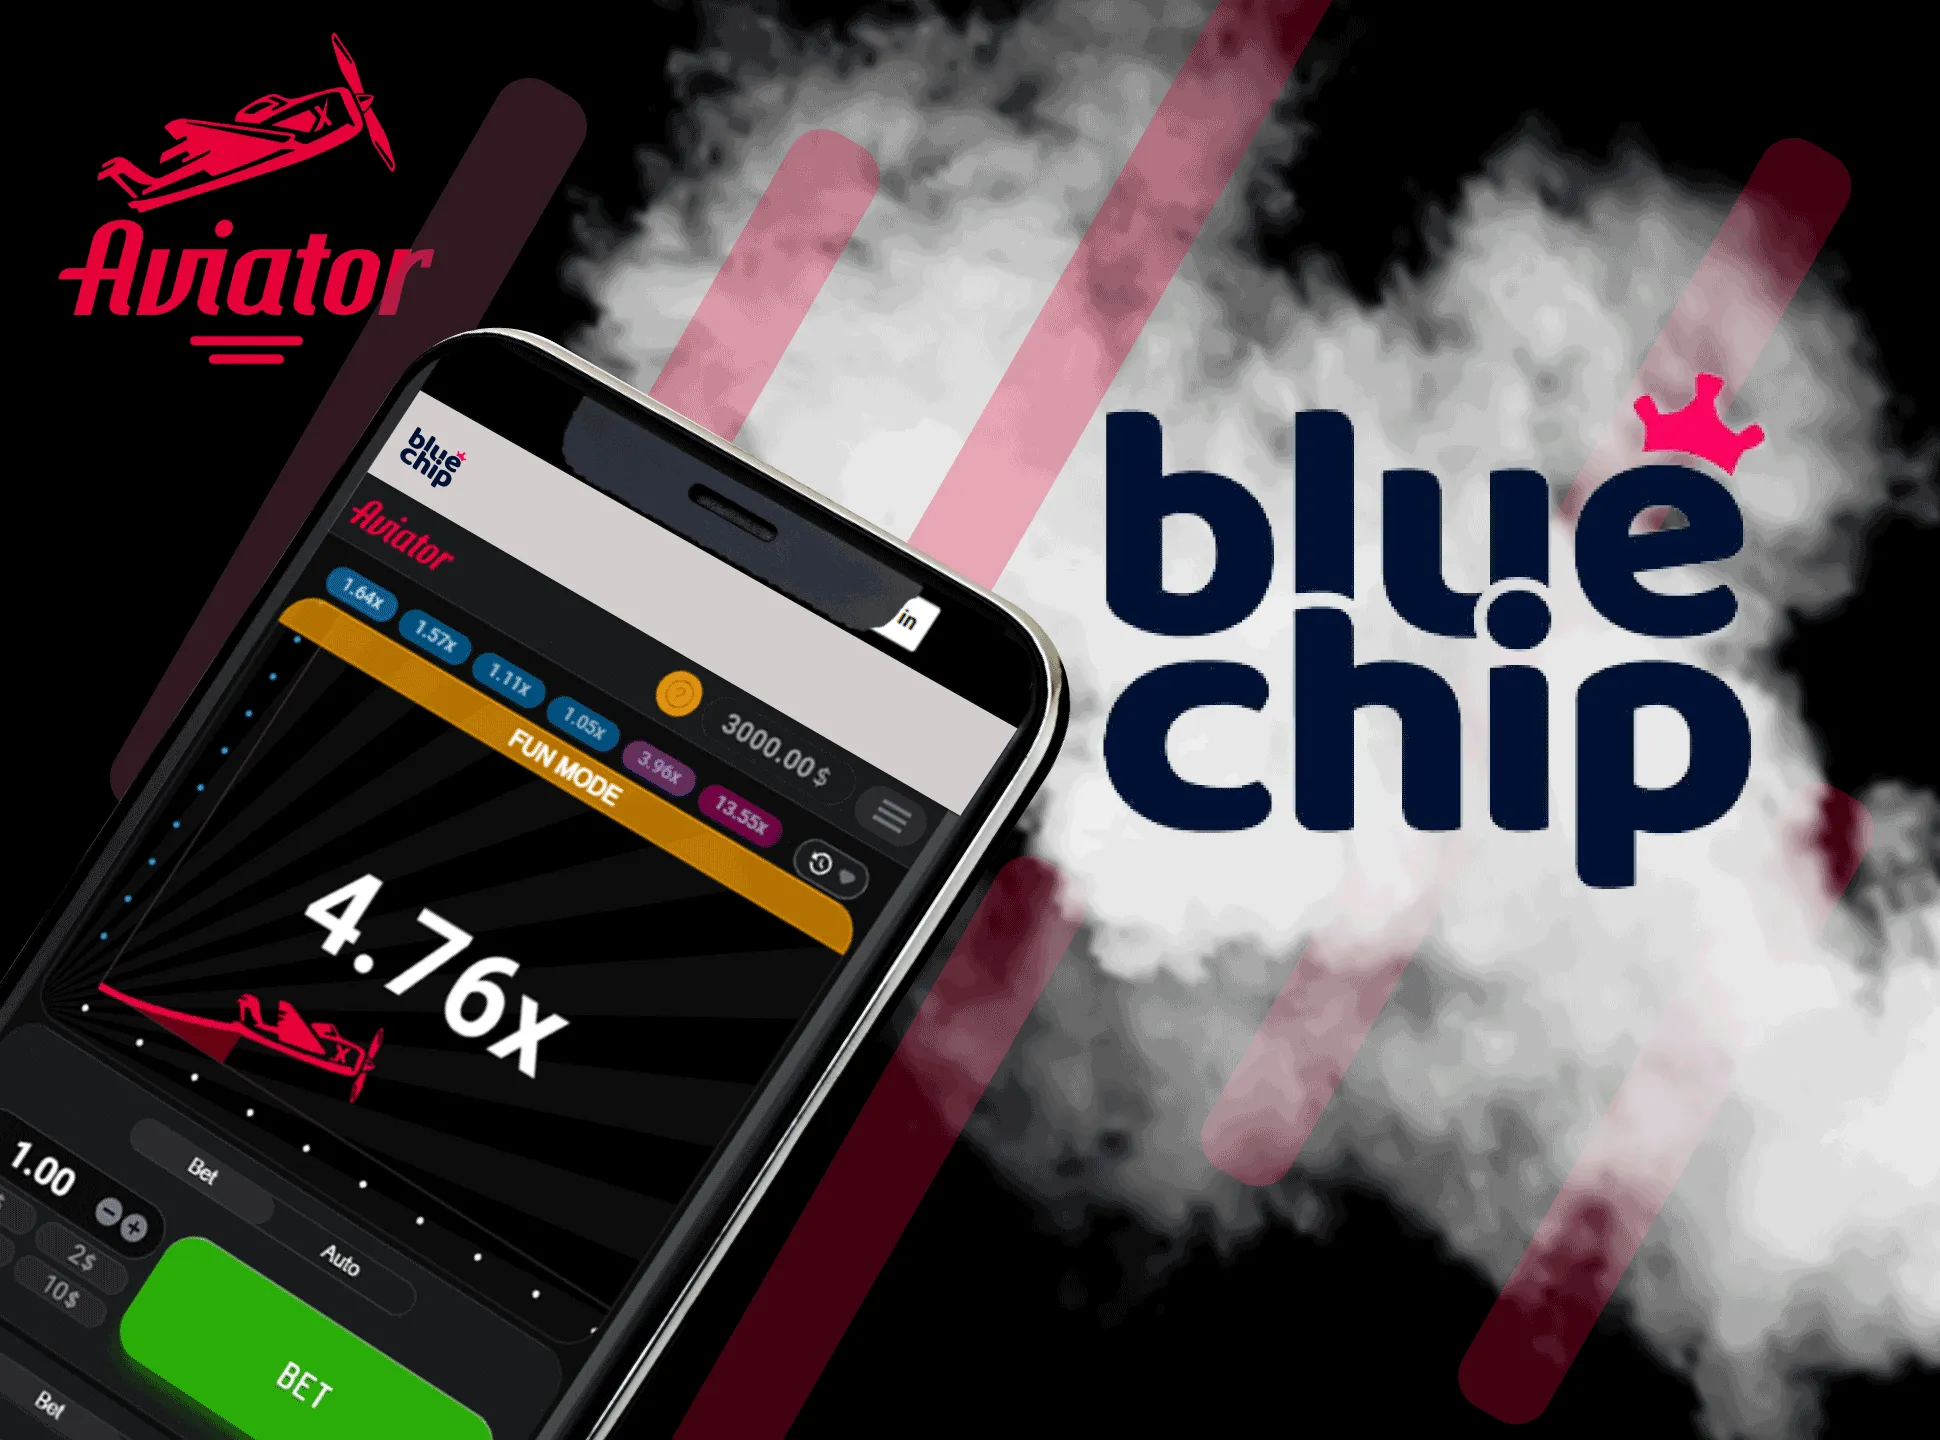 The Bluechip mobile casino also has the Aviator.